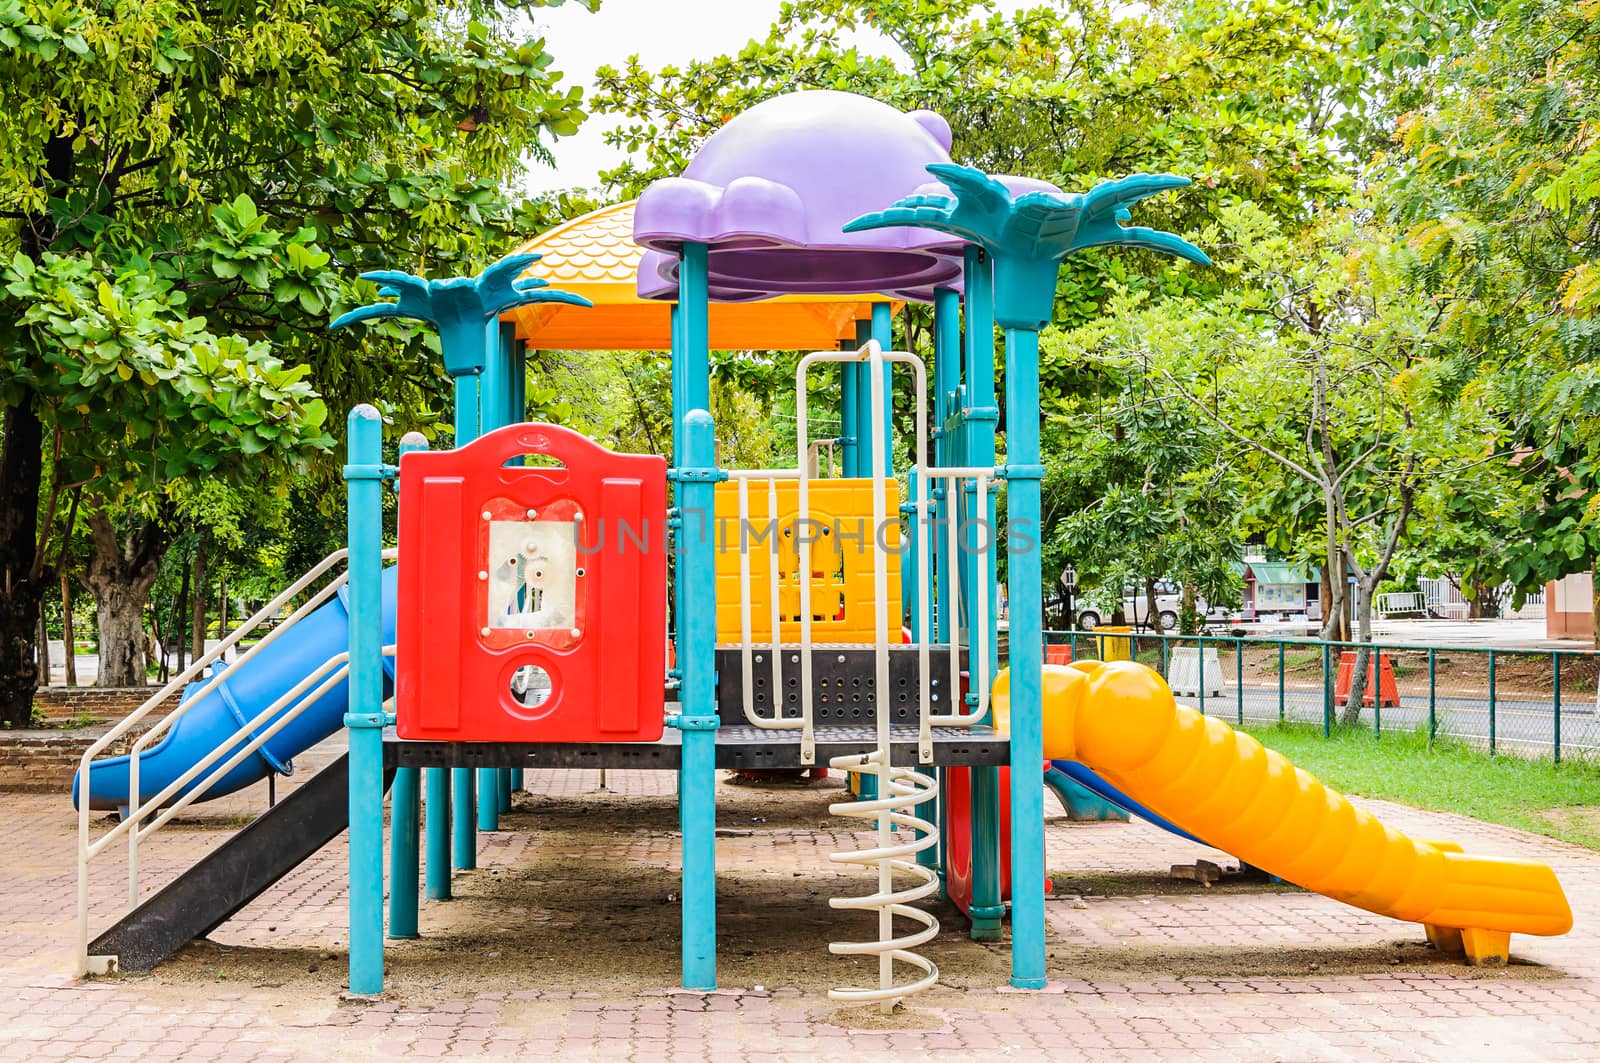 Colorful playground equipment on the playground